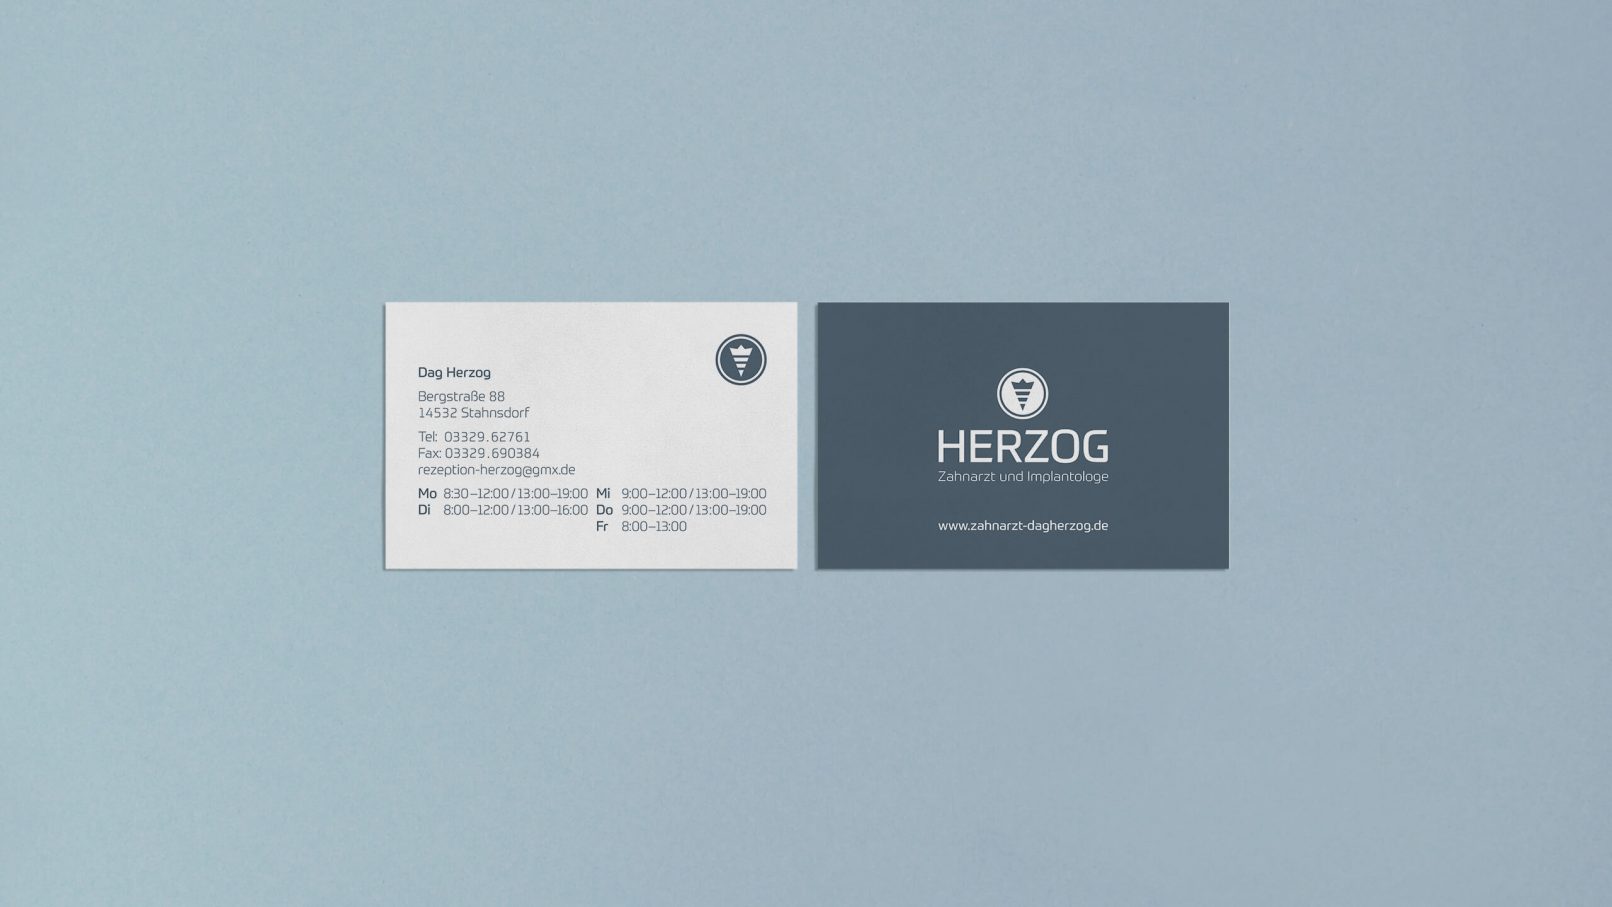 Dag Herzog · Corporate Design · Michael Mikalo